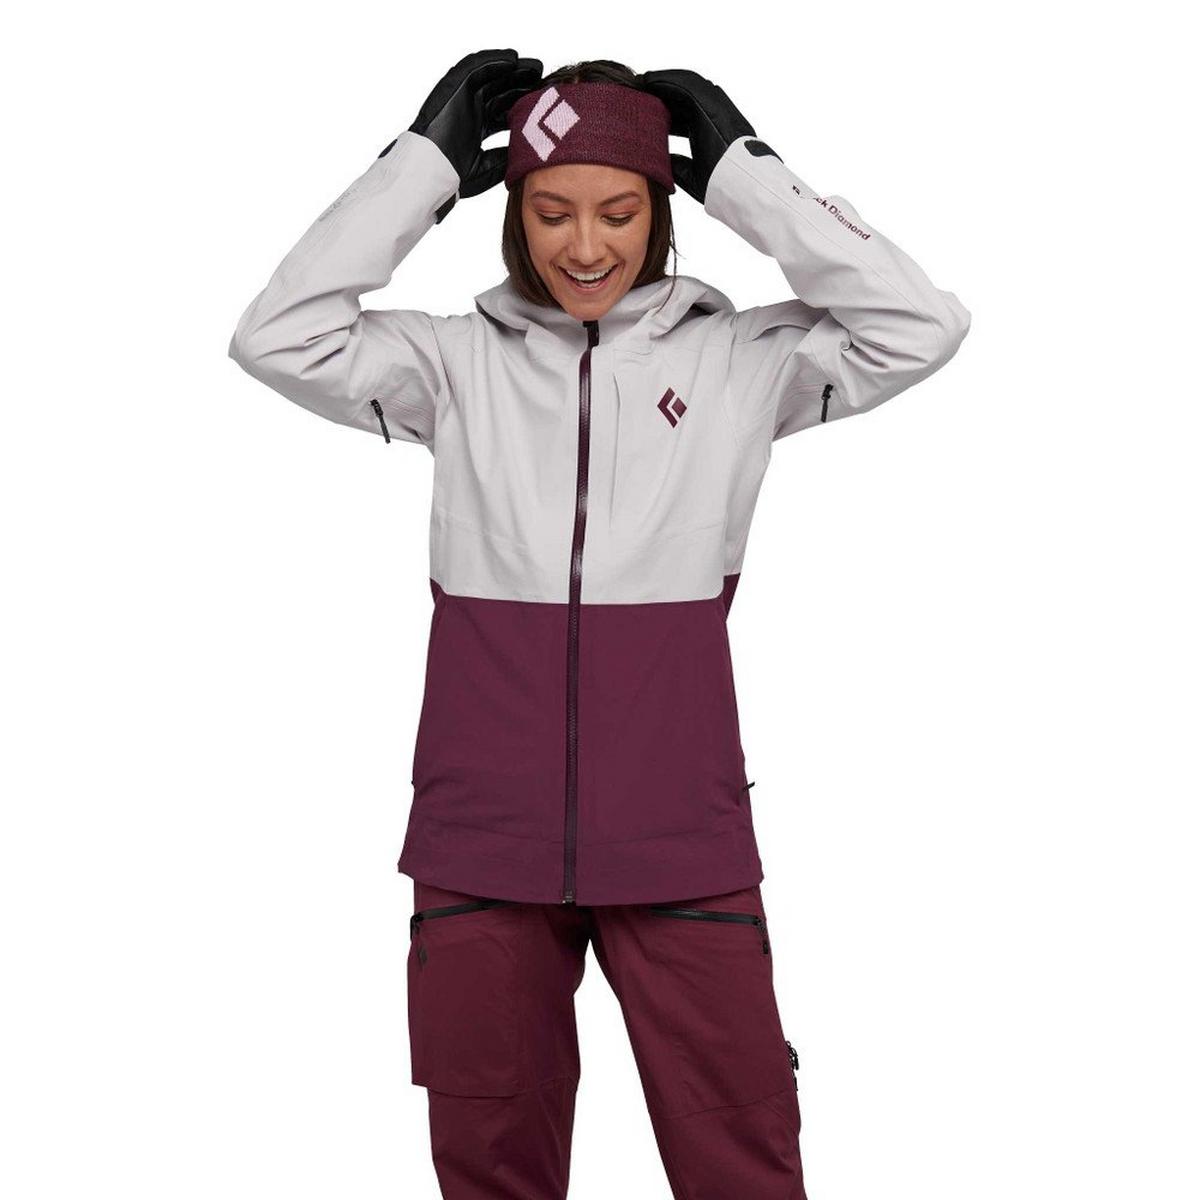 Black Diamond Equipment Women's Recon Stretch Ski Shell Jacket - Purple